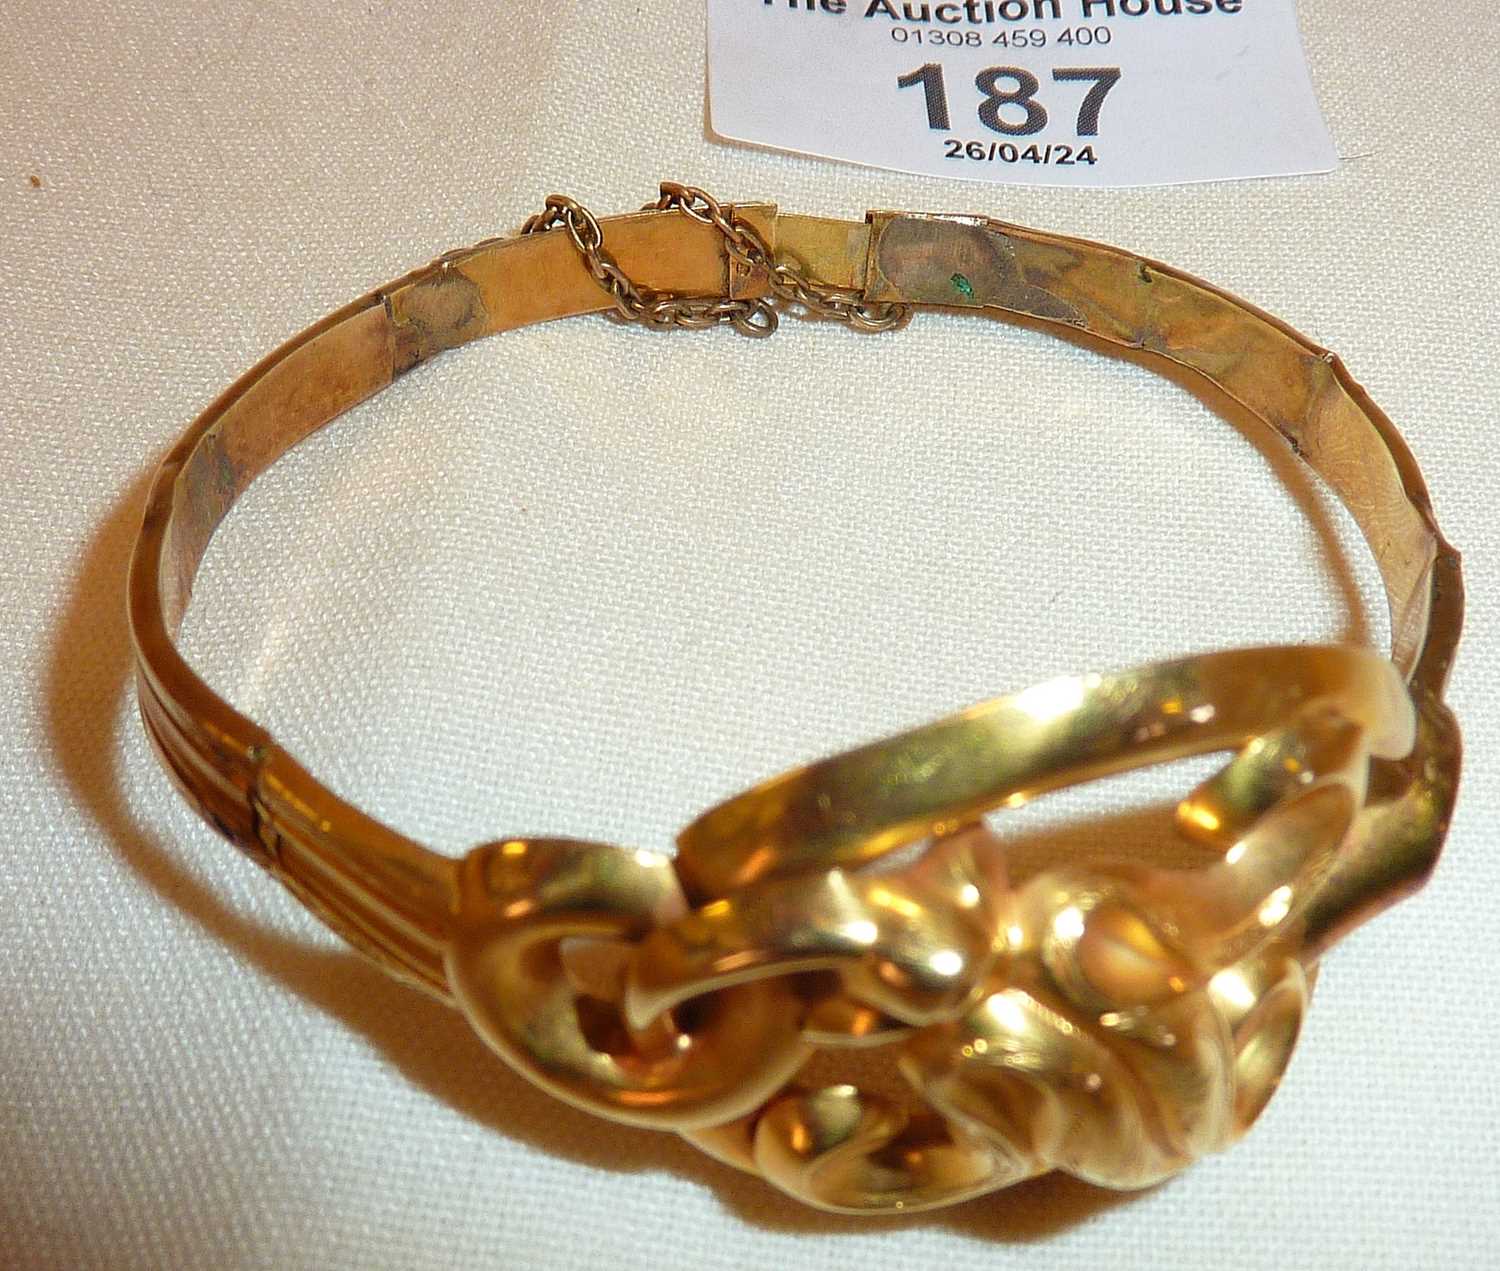 French 18ct gold Belle Epoque Art Nouveau style 19th c. bracelet, some repairs, has eagle's head - Image 2 of 4